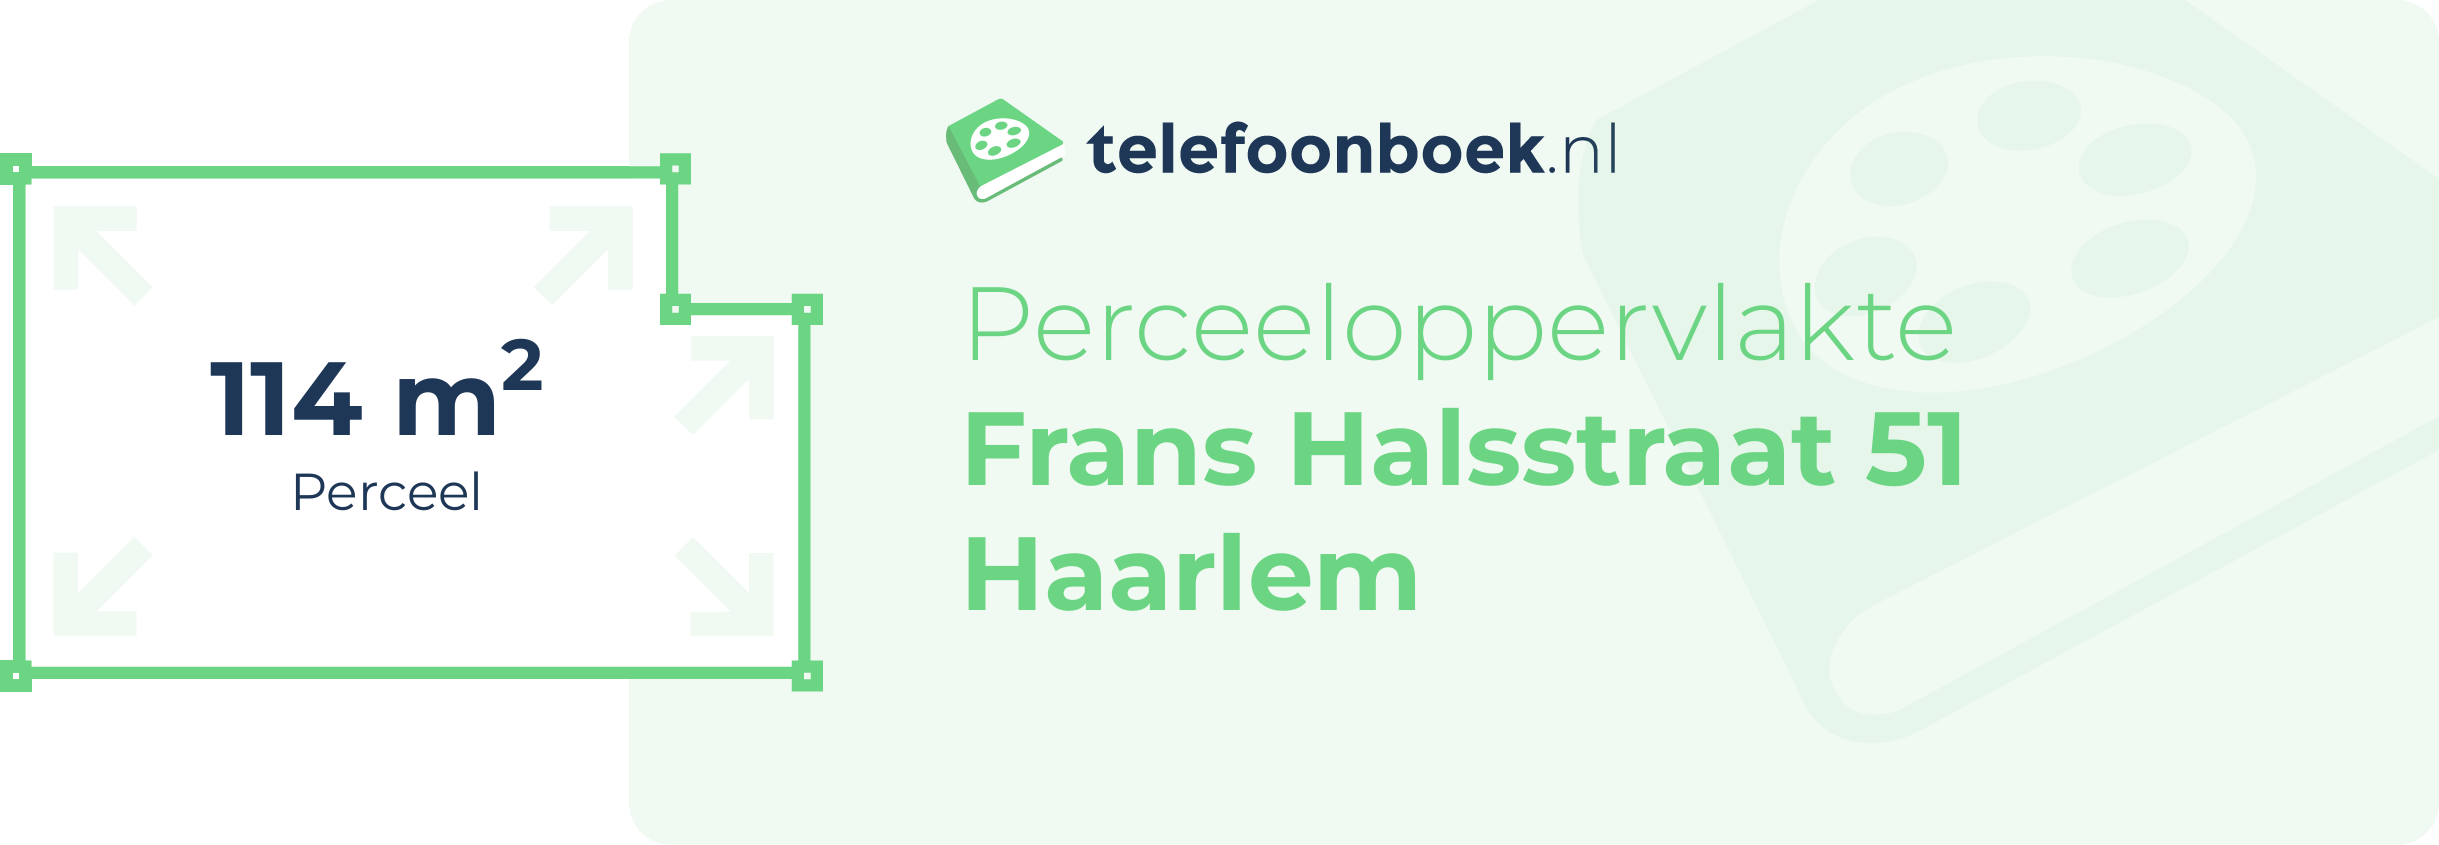 Perceeloppervlakte Frans Halsstraat 51 Haarlem